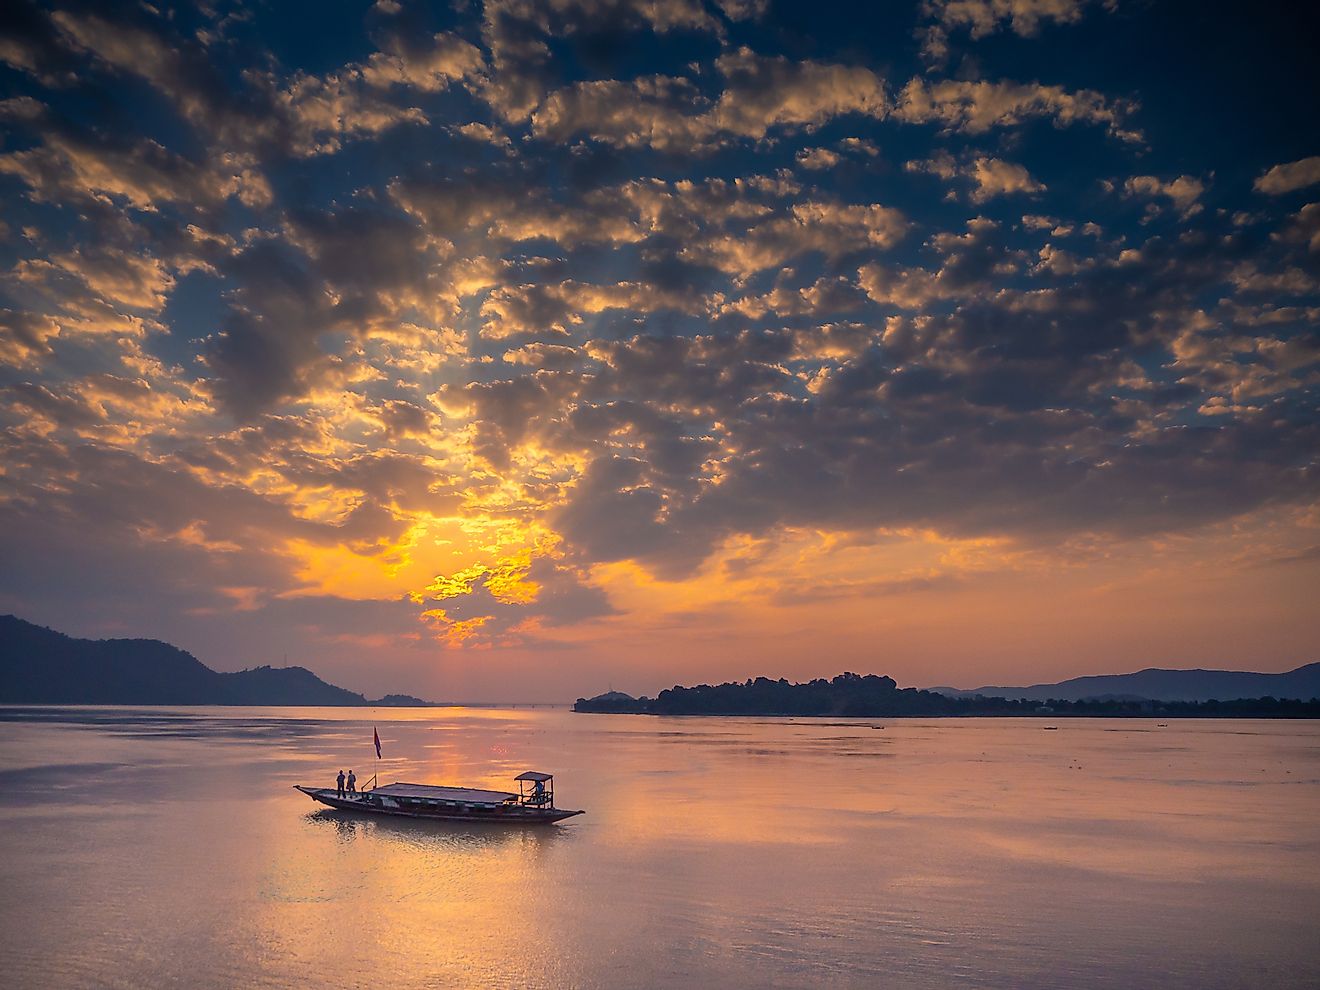 Sunset on the Brahmaputra River